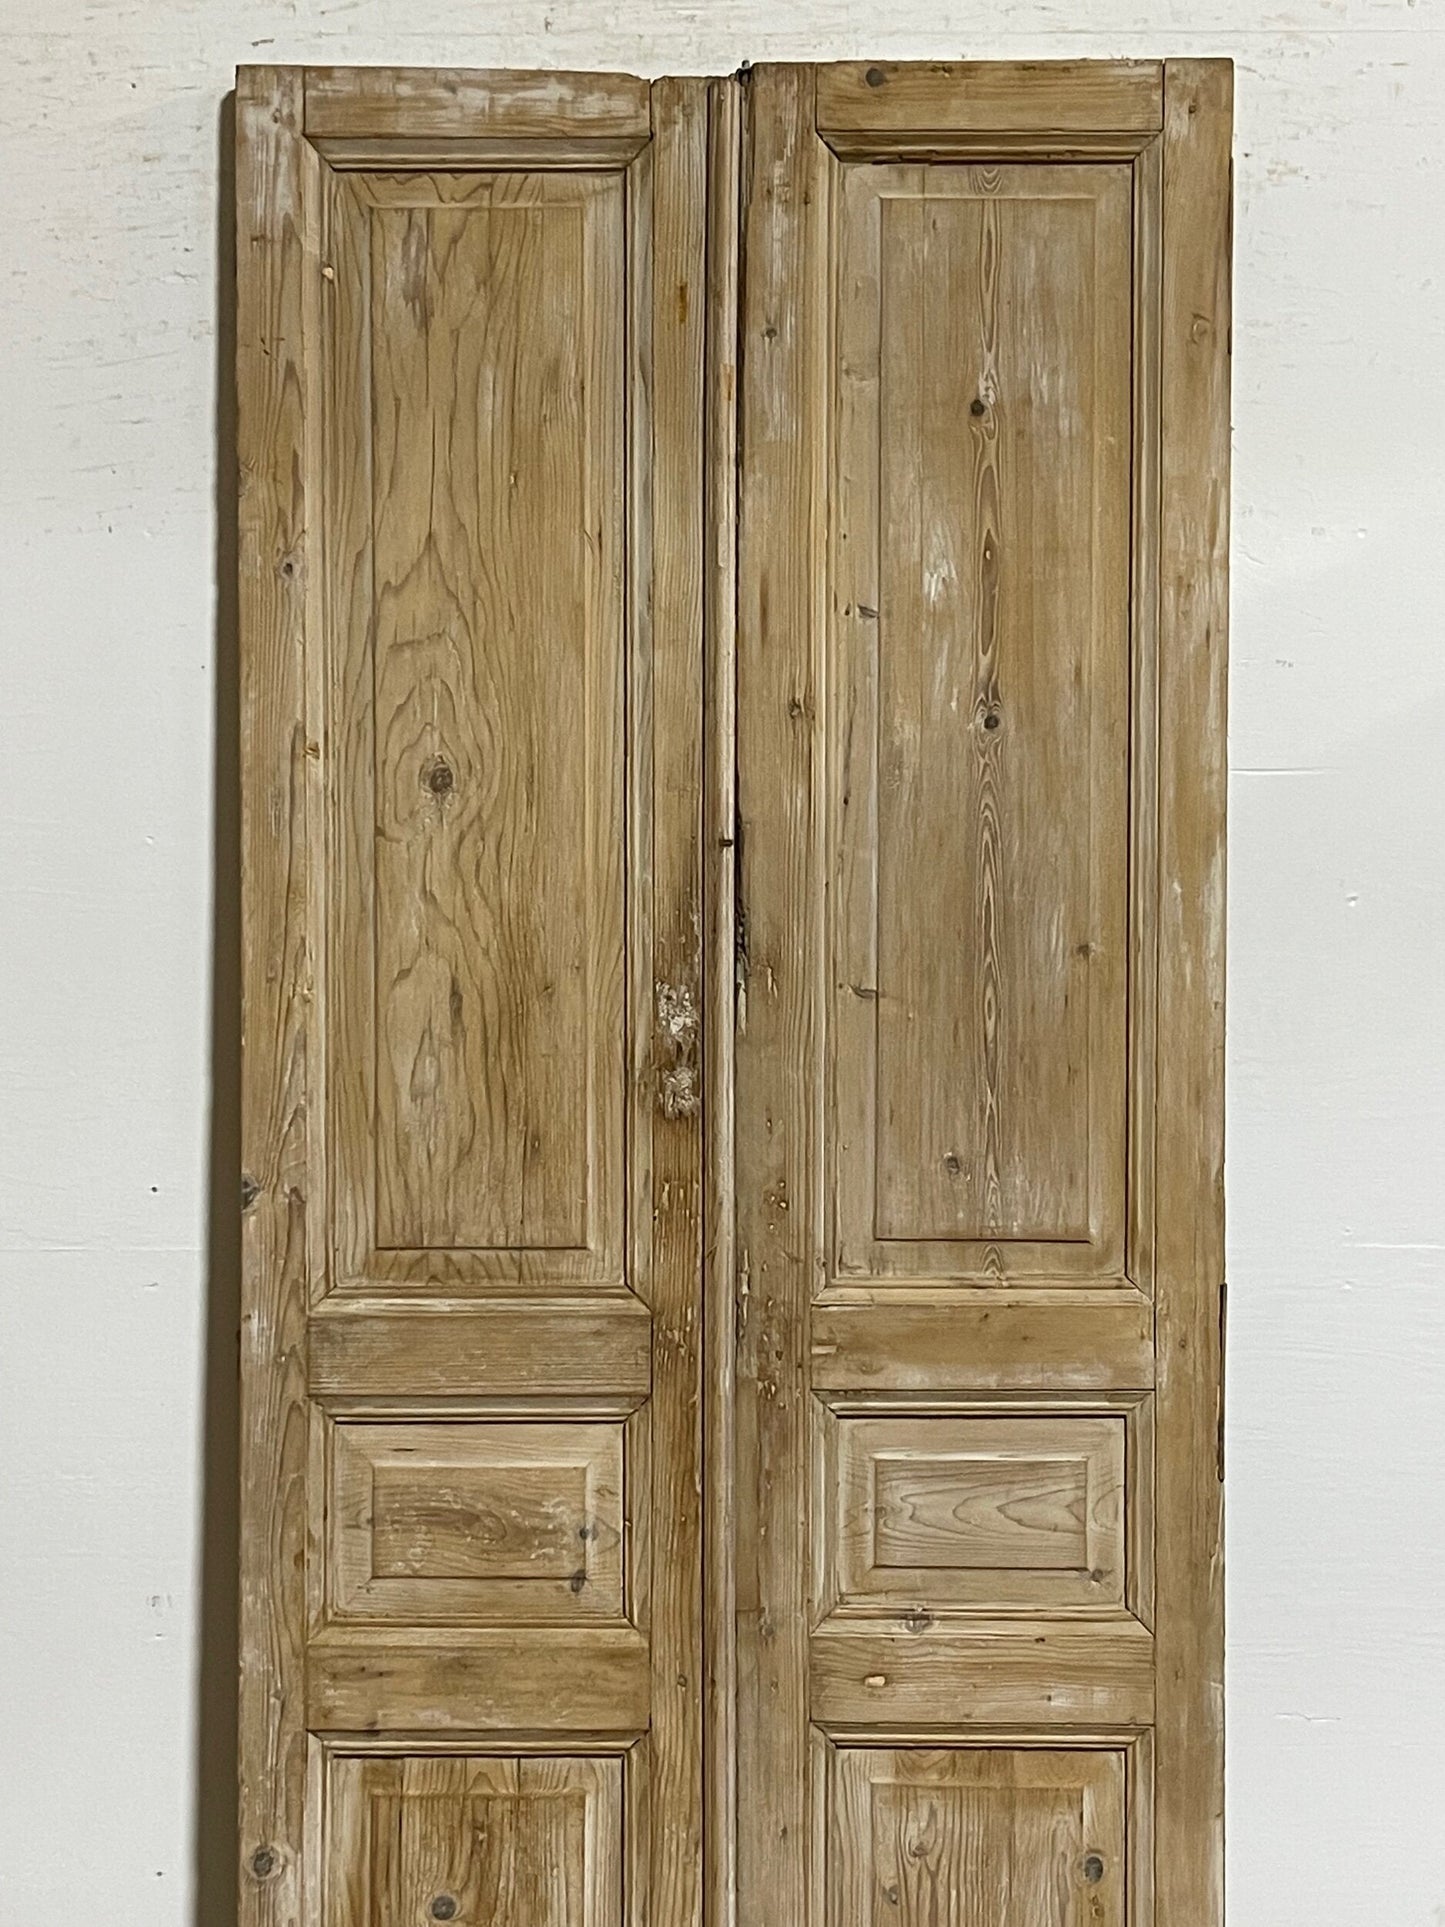 Antique French panel doors (93 x 38.5) I042